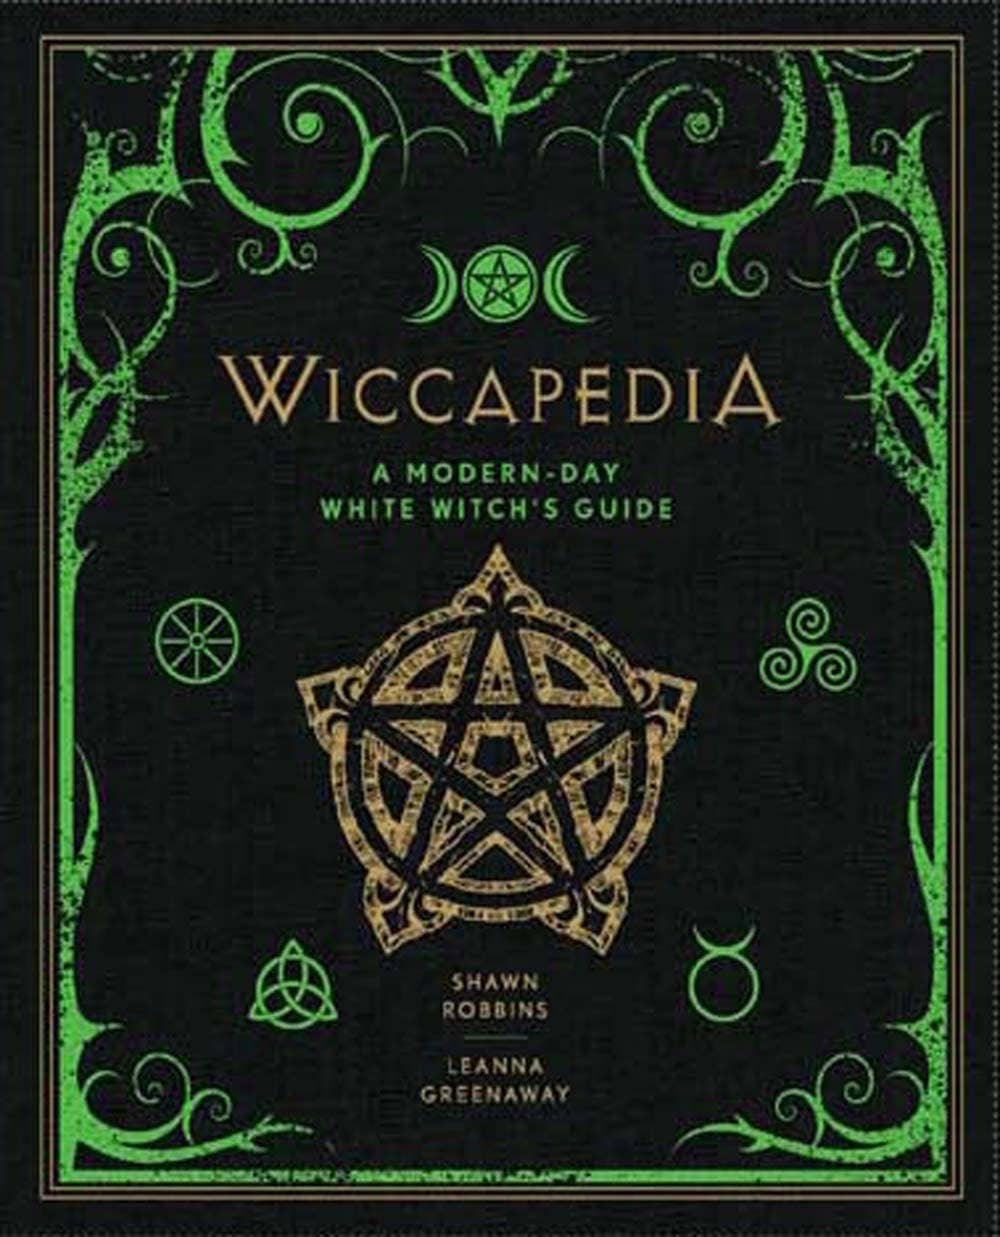 Wiccapedia by Shawn Robbins